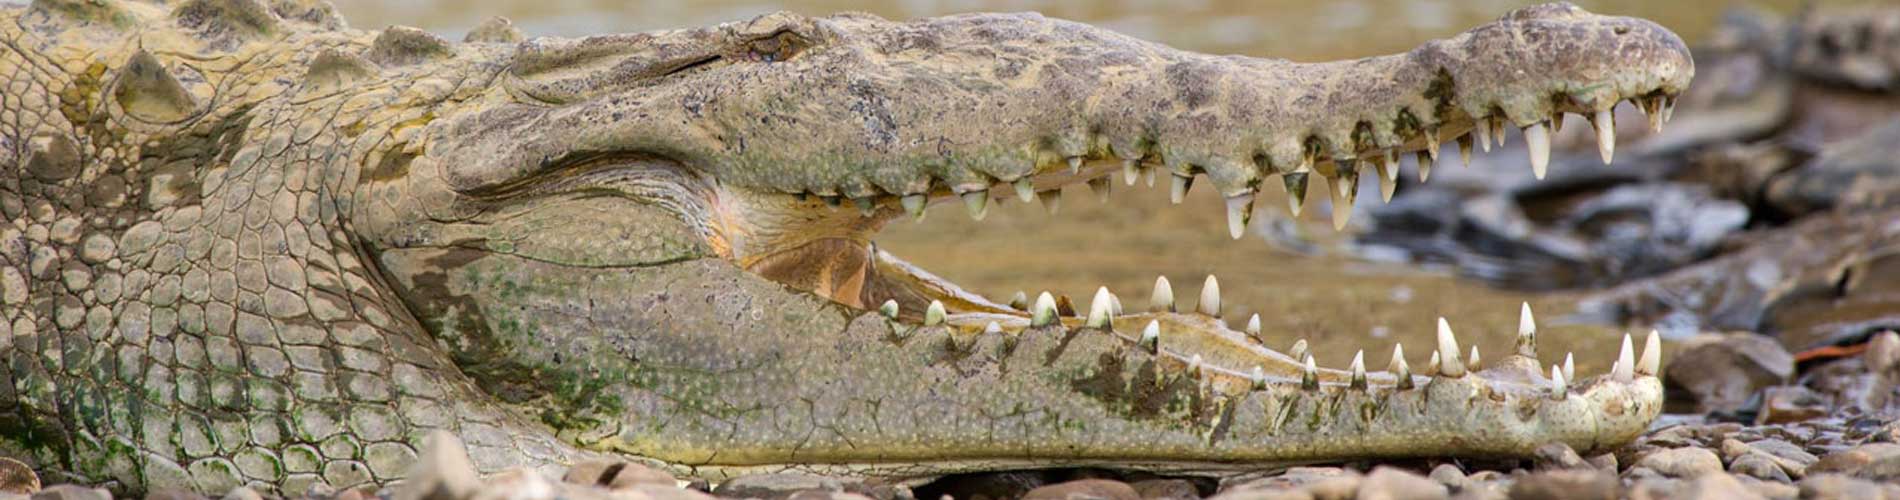 Krokodillentour